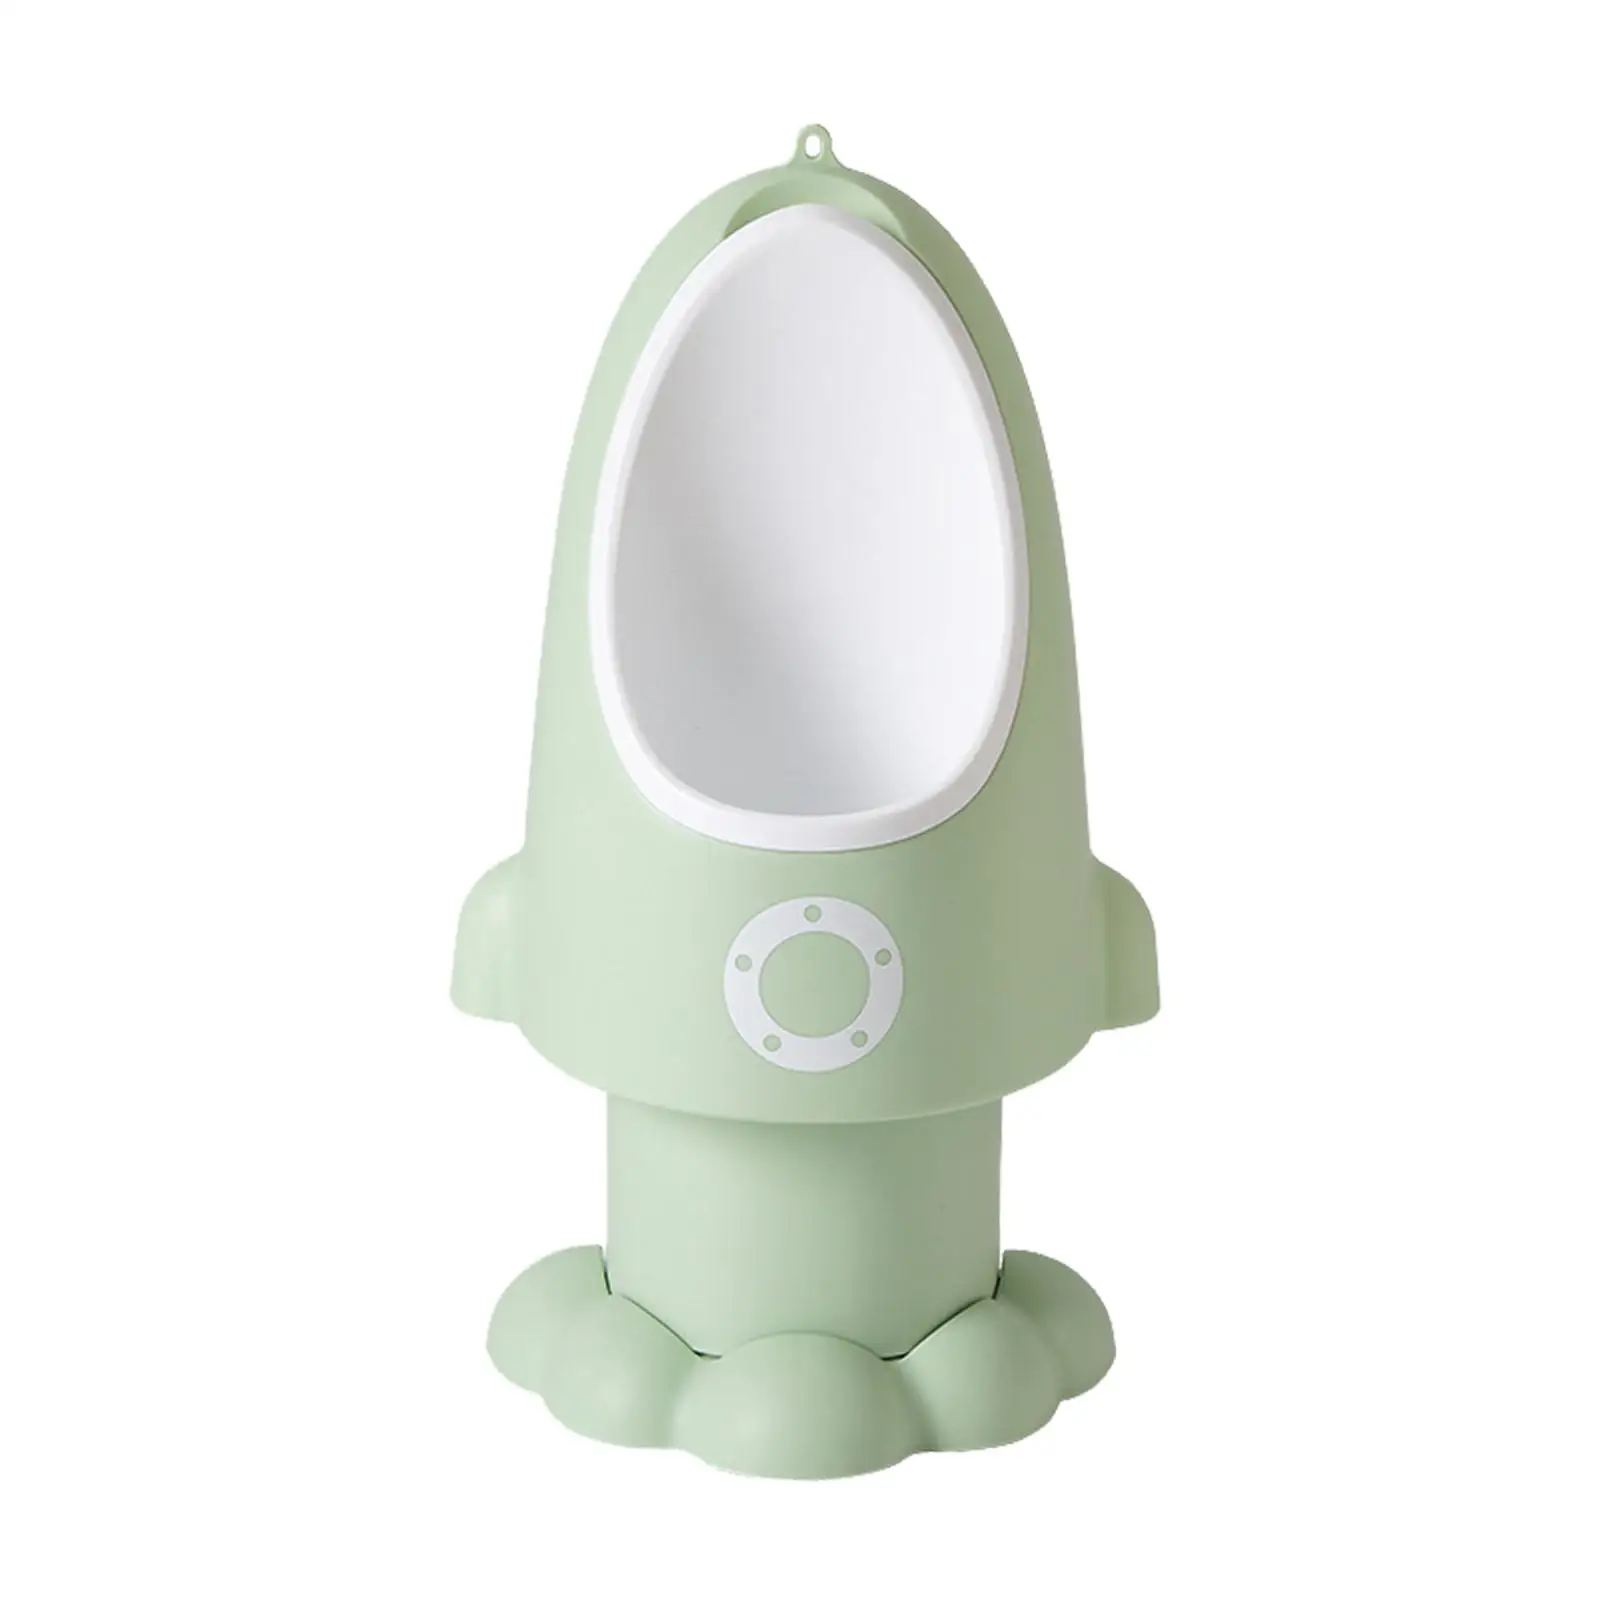 Rocket Shape Child Potty Urinal Toilet Pee Trainer Urinal Trainer Pee Training for Baby Kids Boys Toddler Children